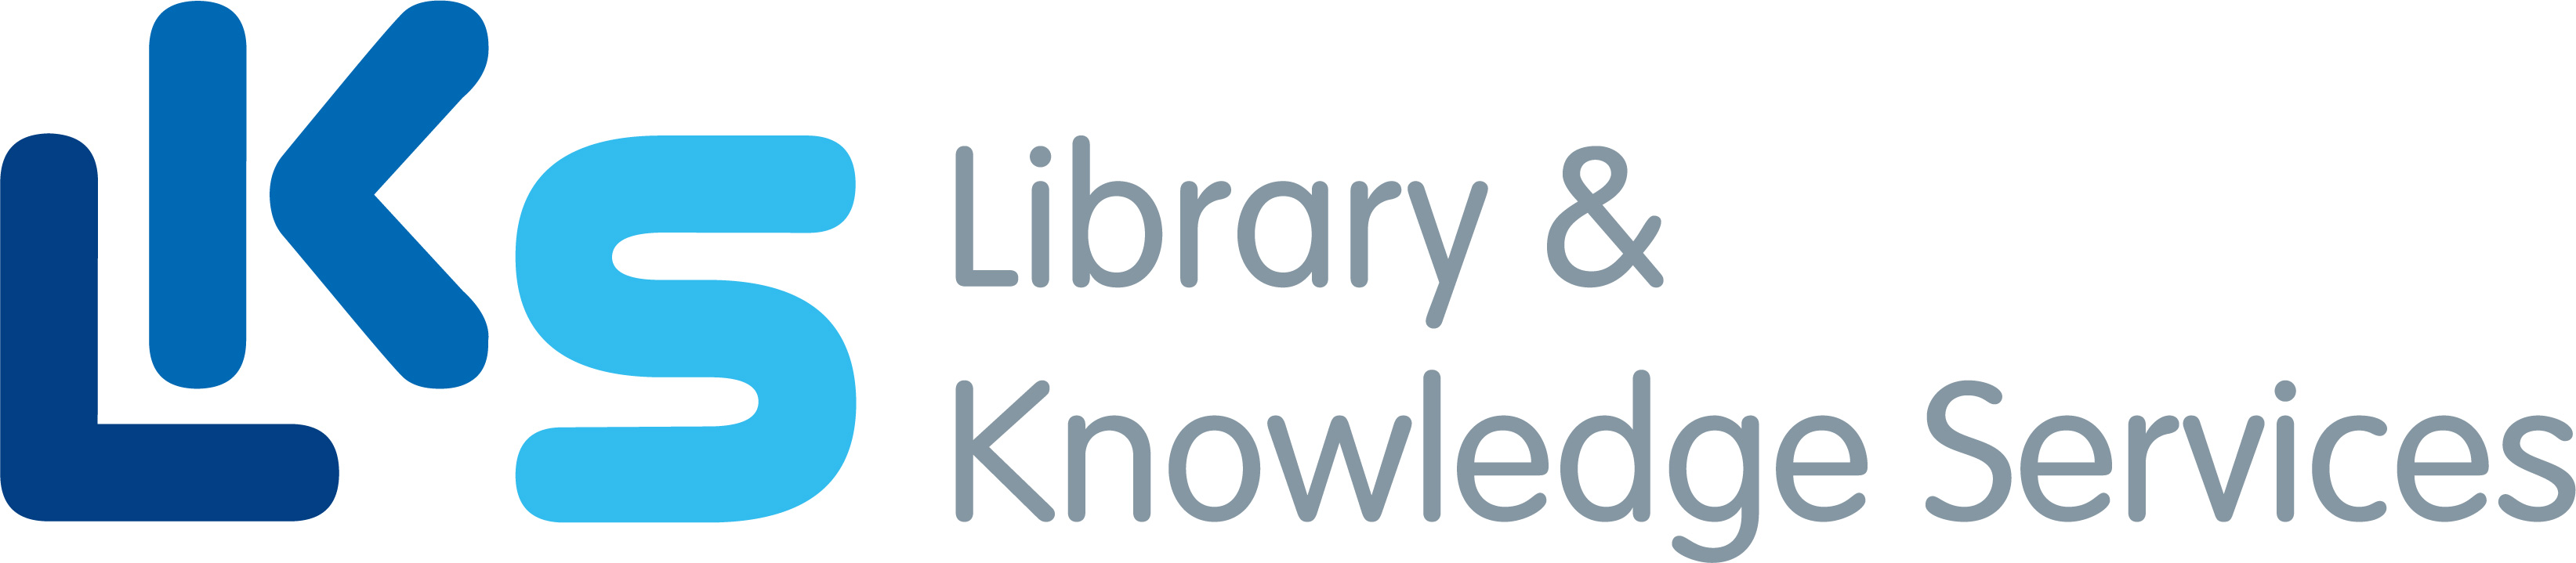 Library services logo